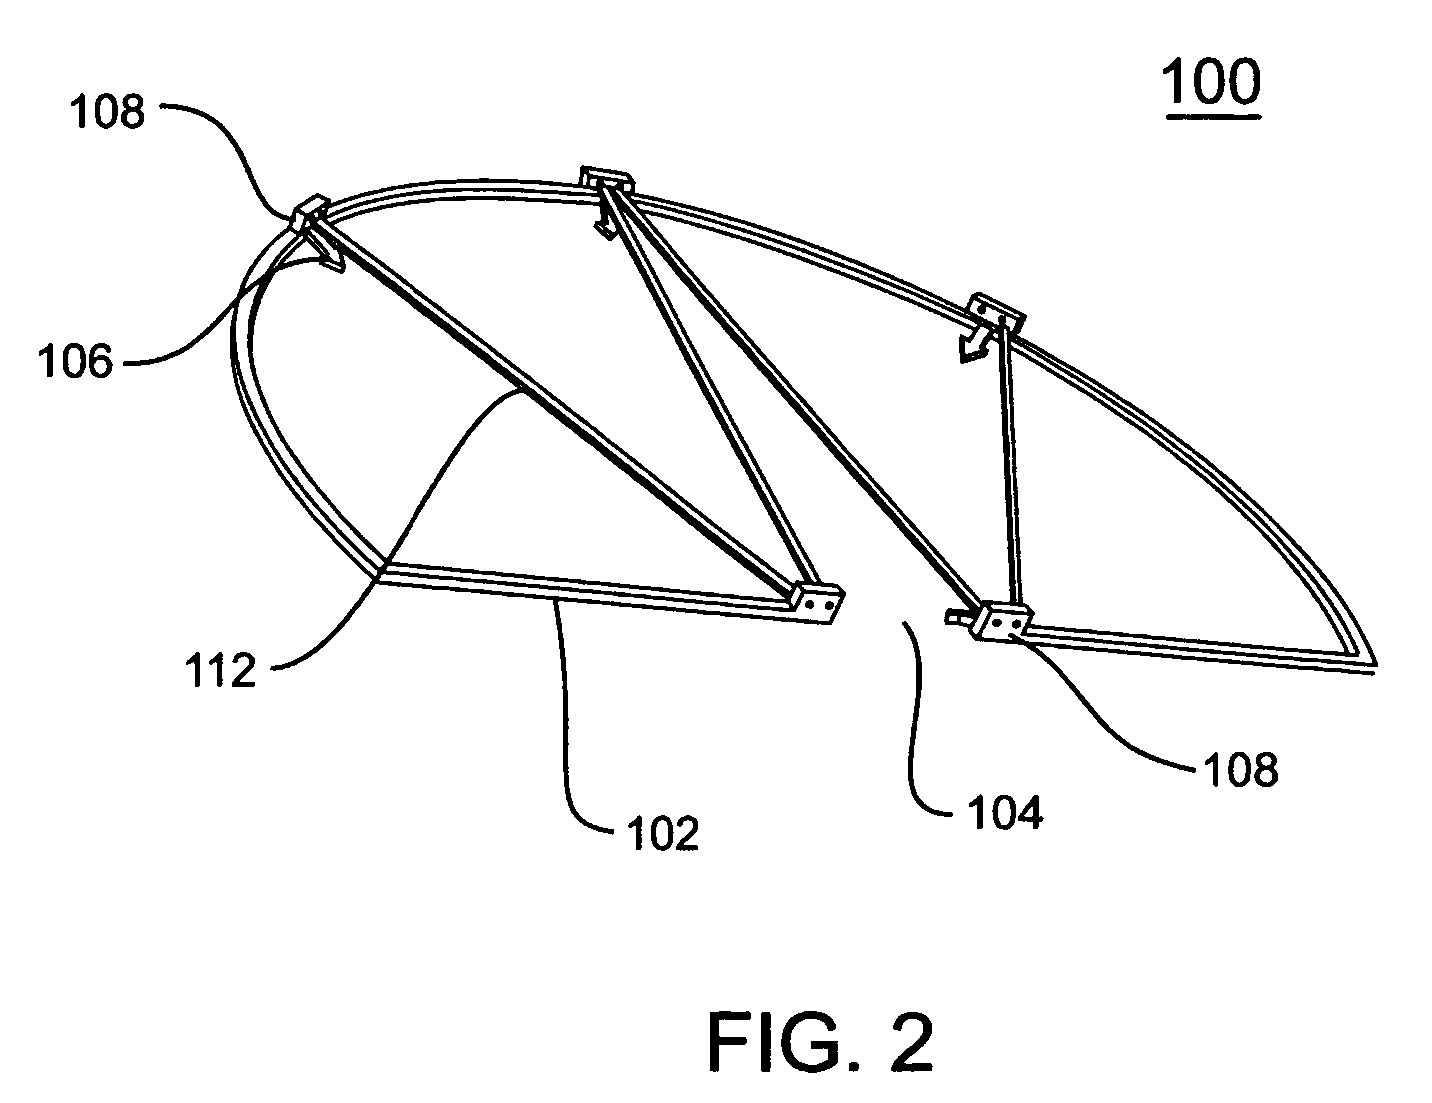 Annuloplasty device having shape-adjusting tension filaments